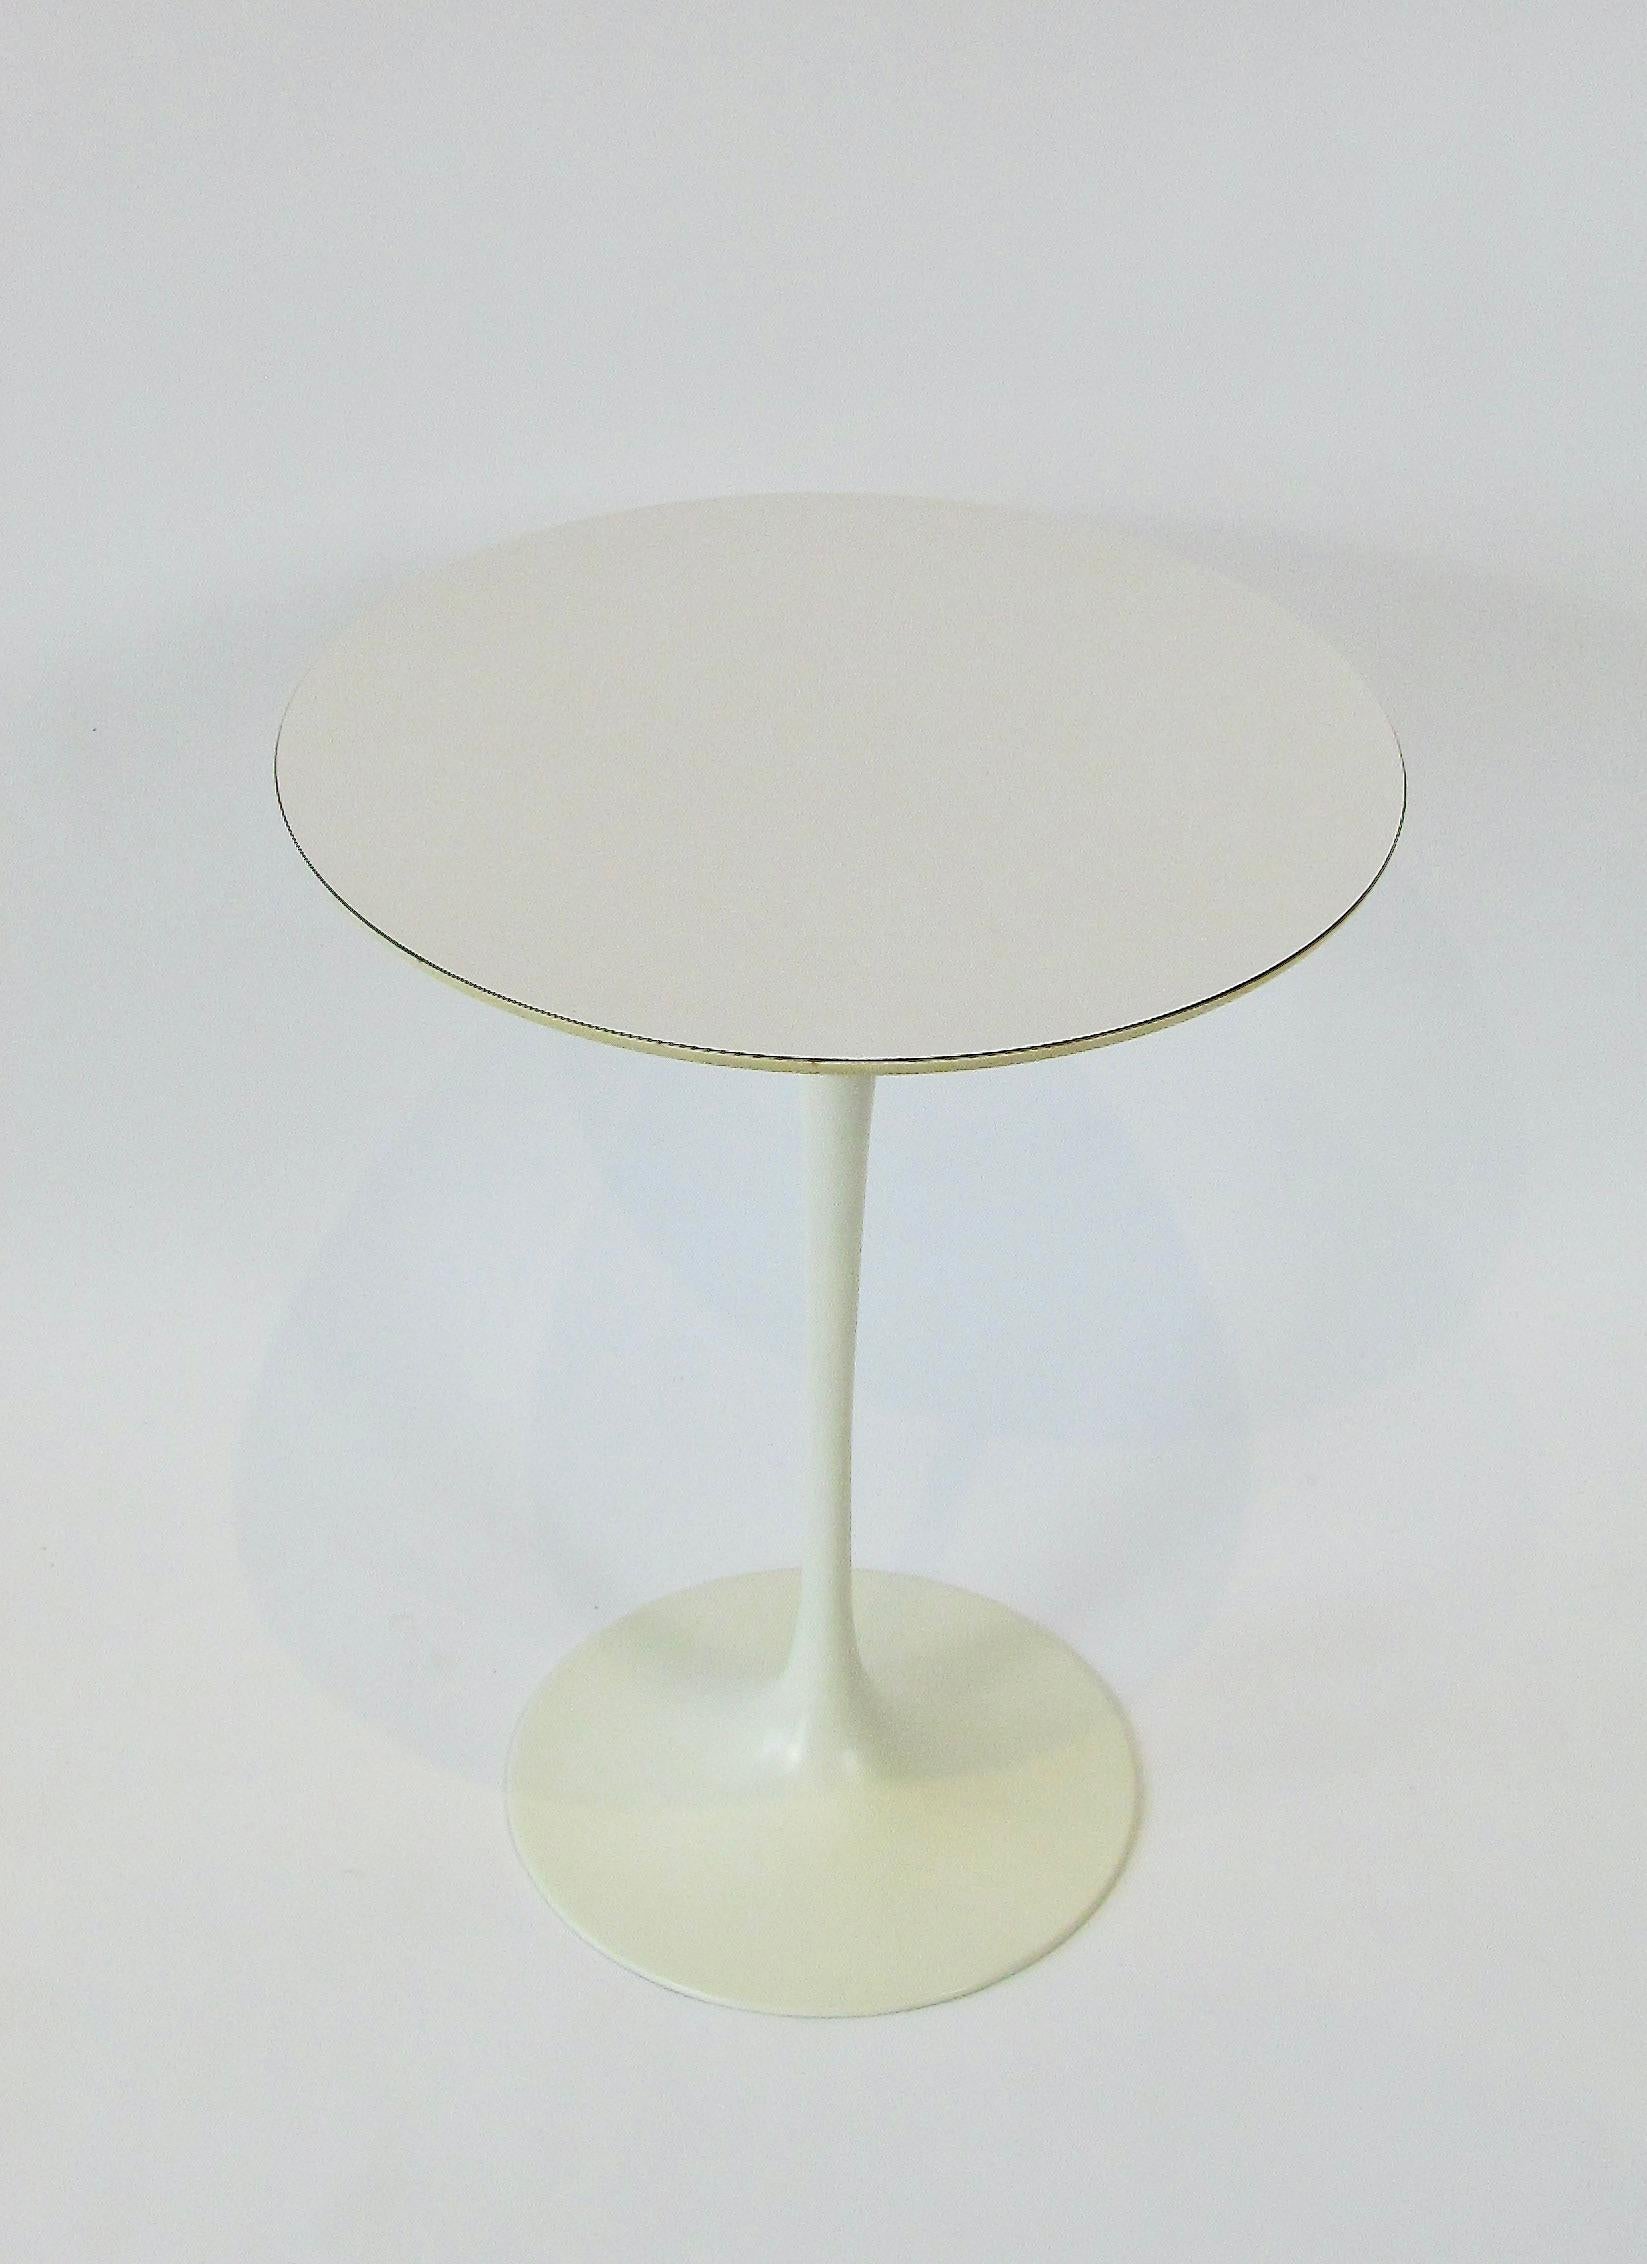 20th Century Eero Saarinen for Knoll Tulip Group Side Table